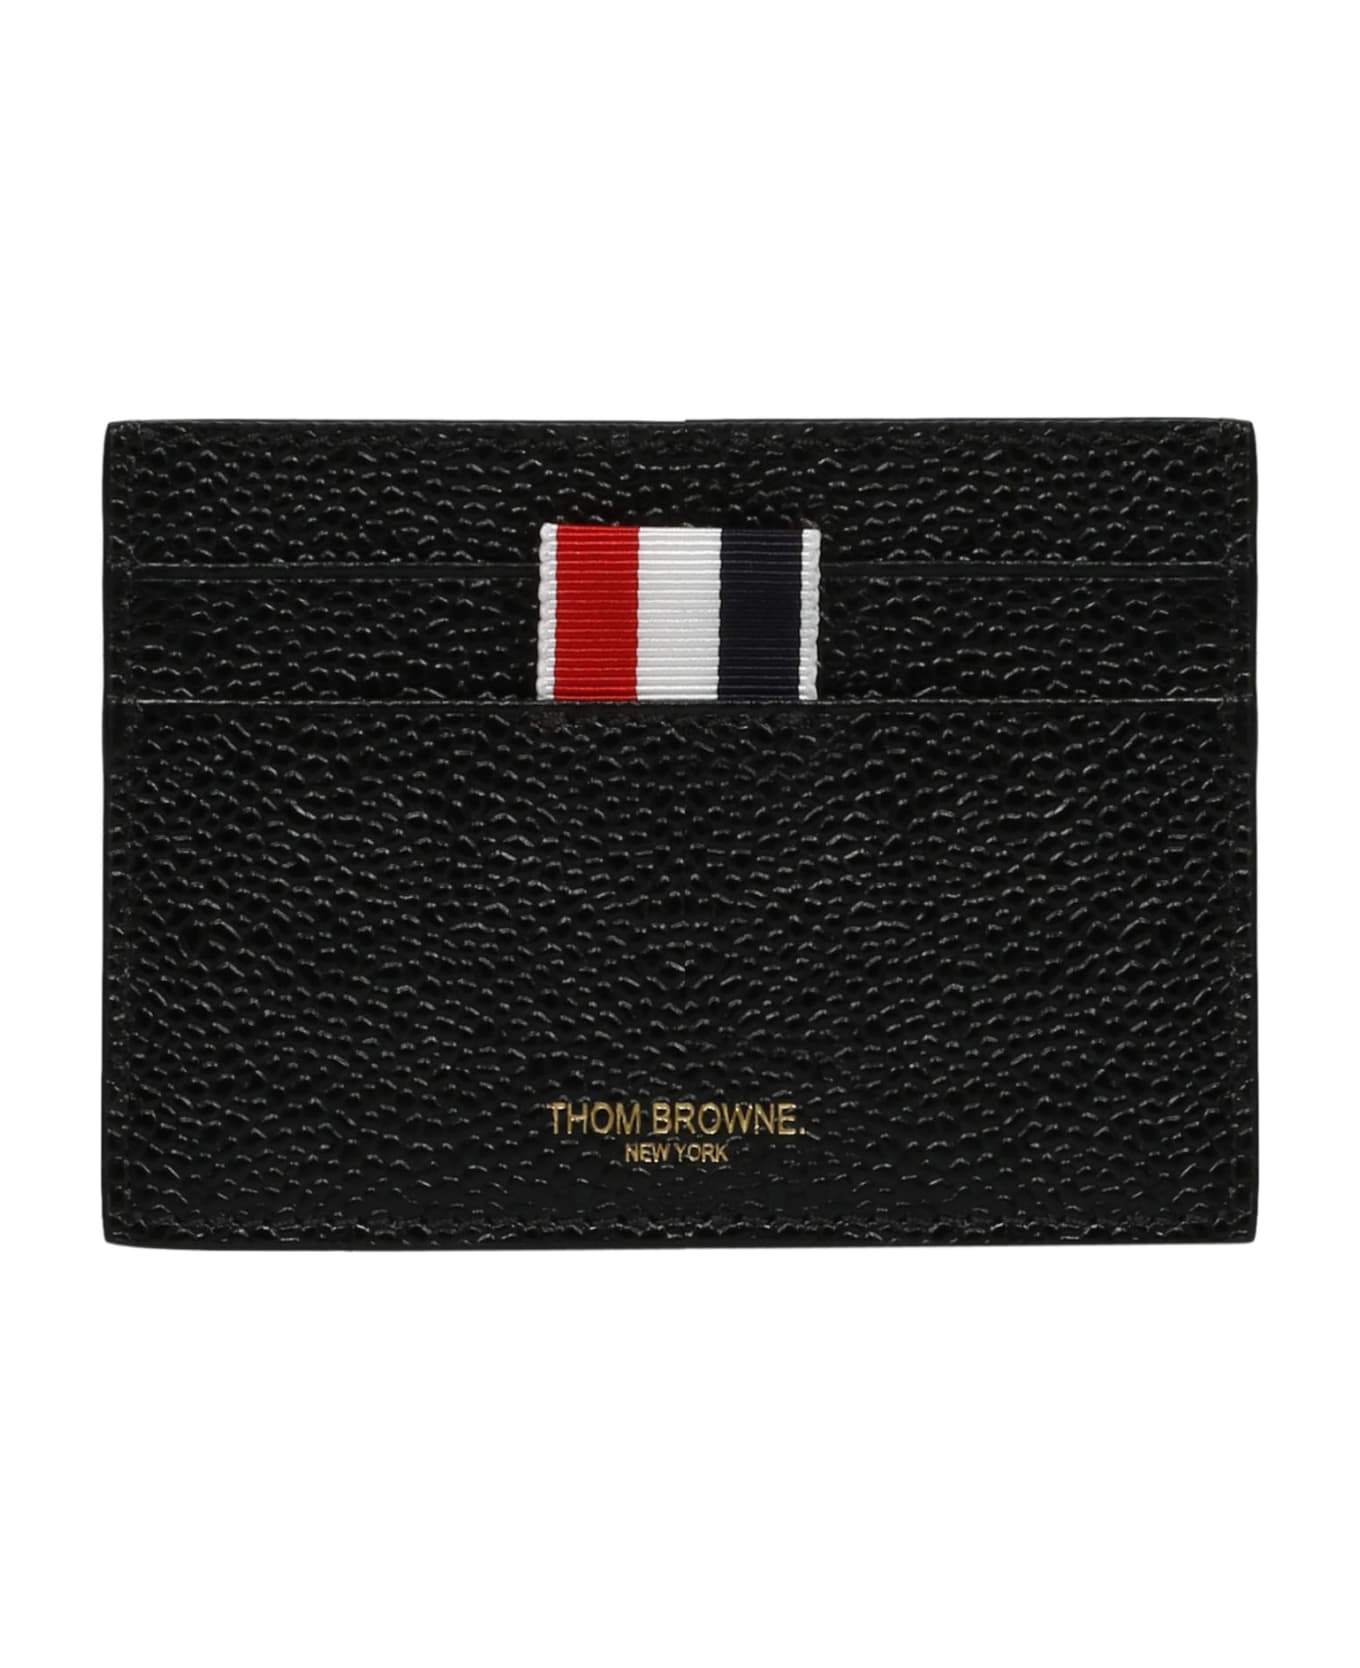 Thom Browne Black Pebble Grain Leather Card Holder - Black